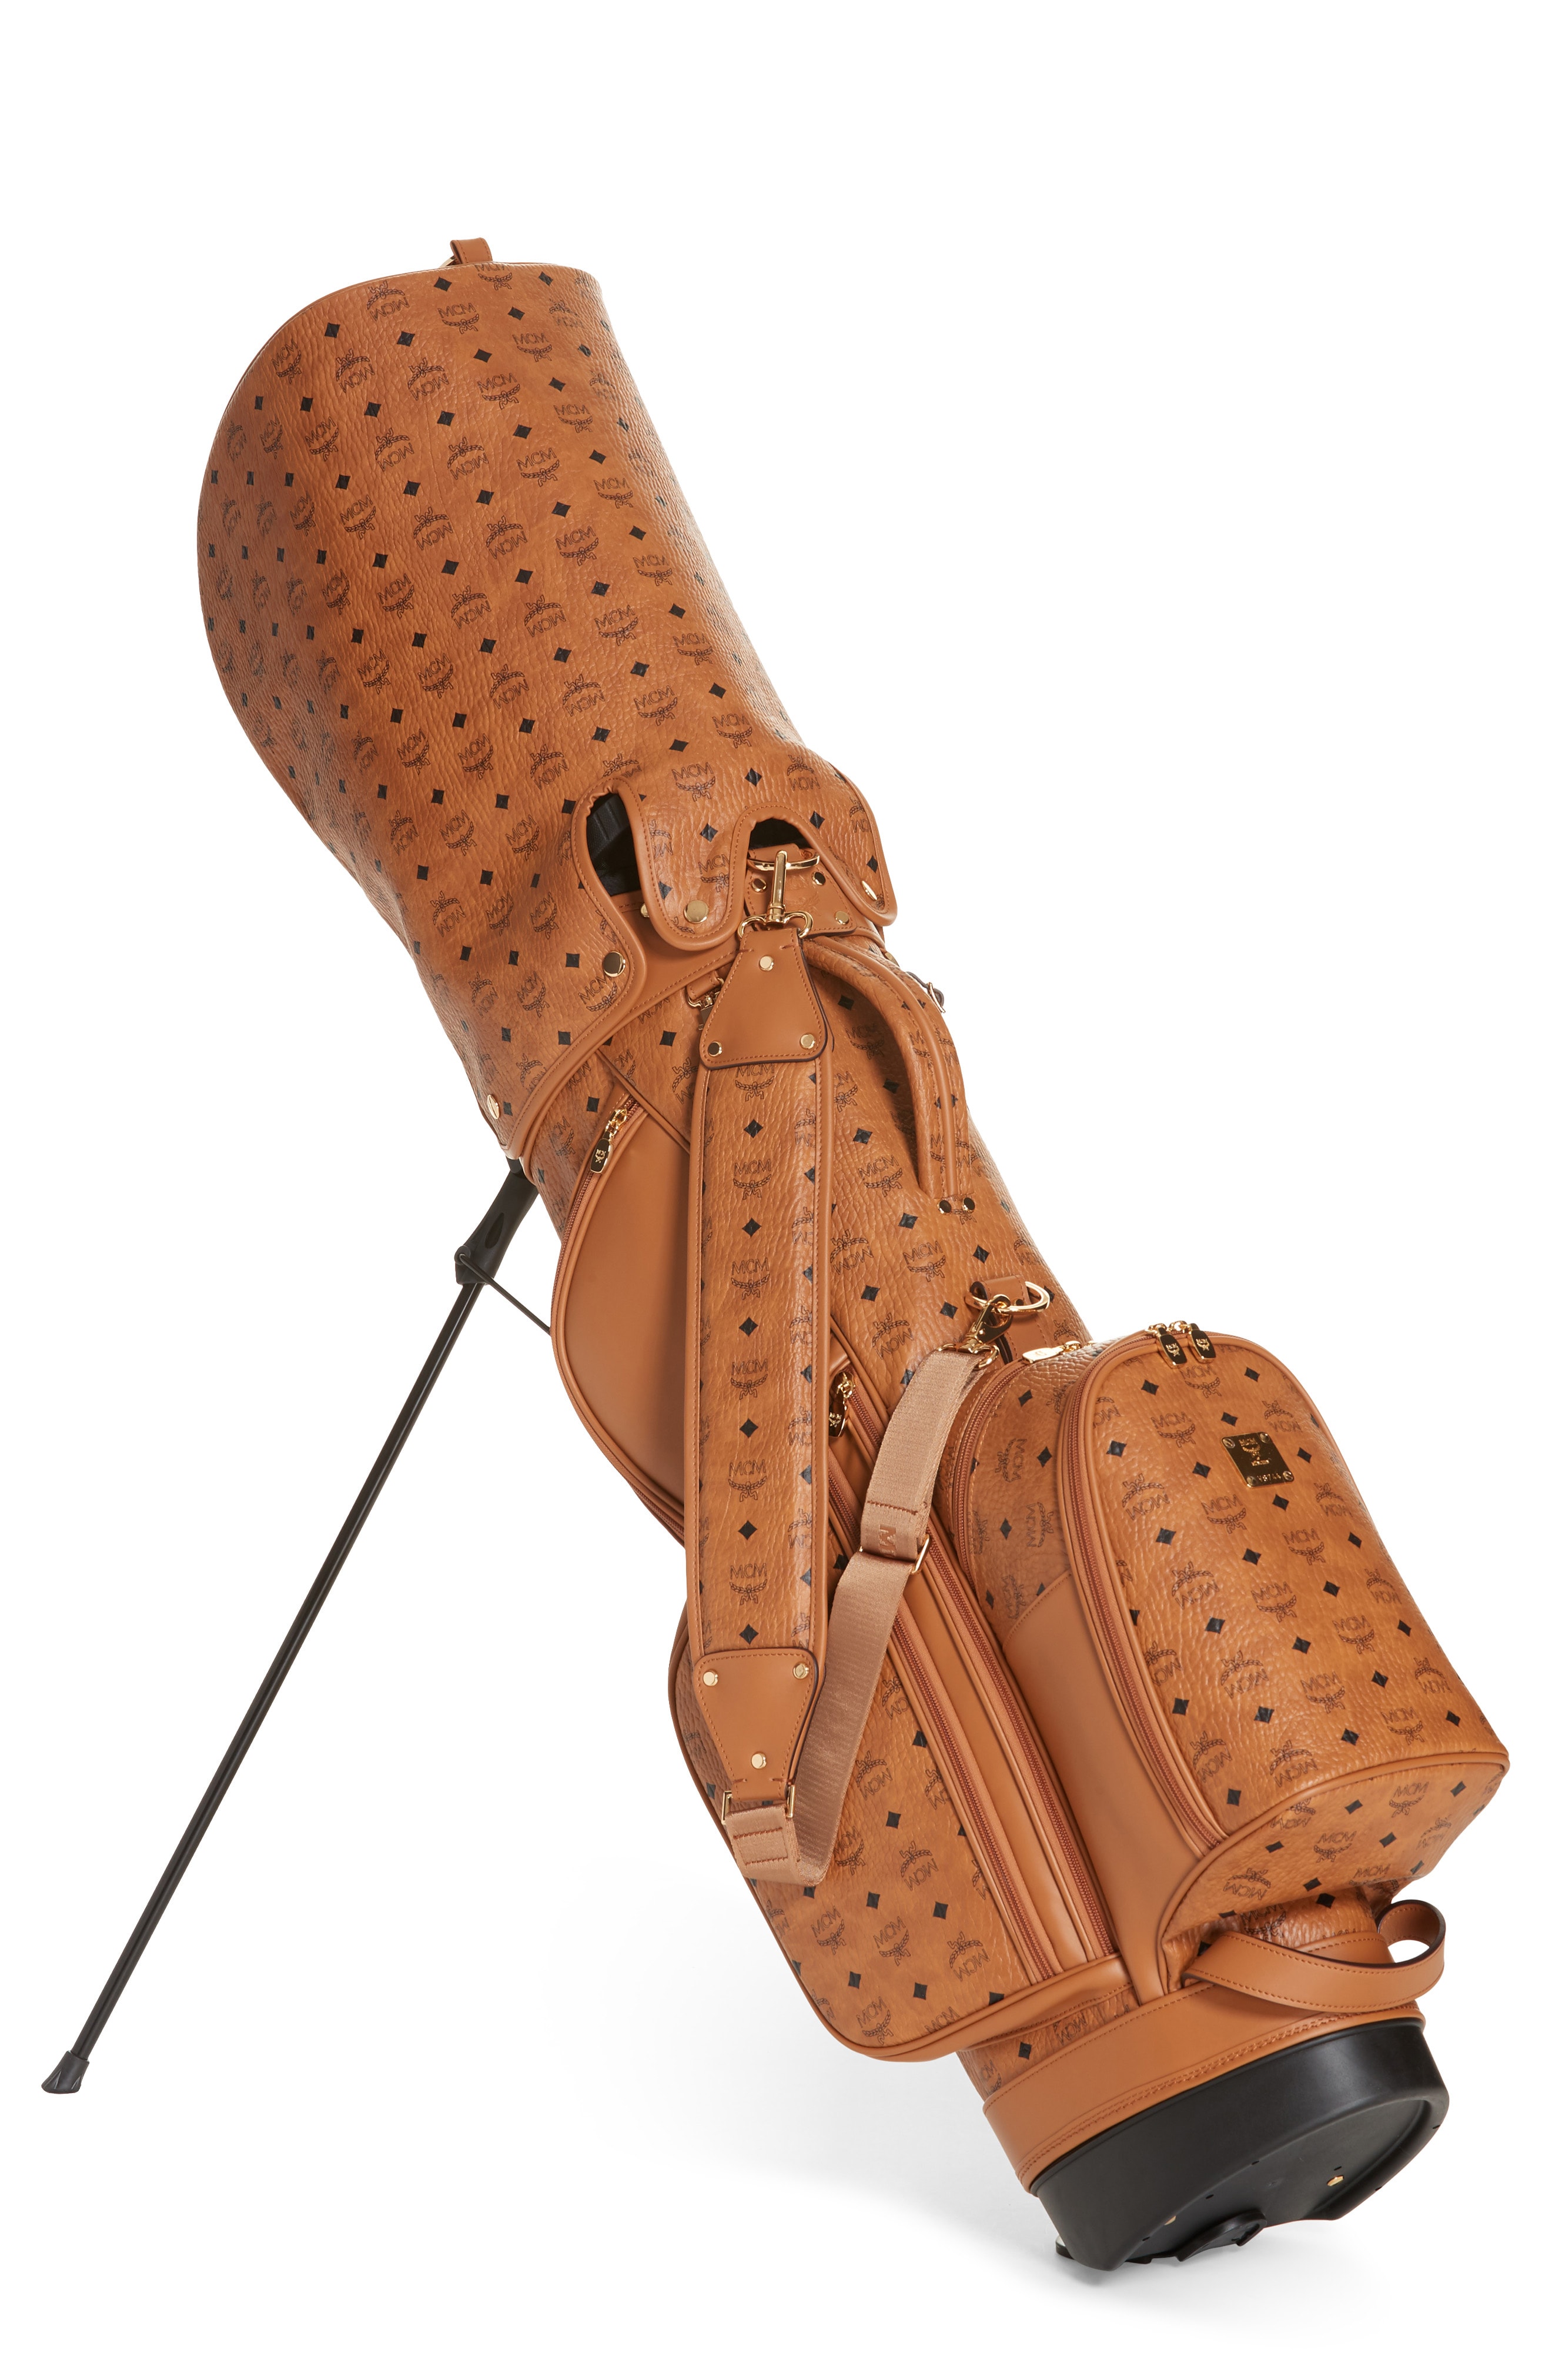 Christian Dior Multicolored Leather Argyle Golf Satchel Bag  eBay